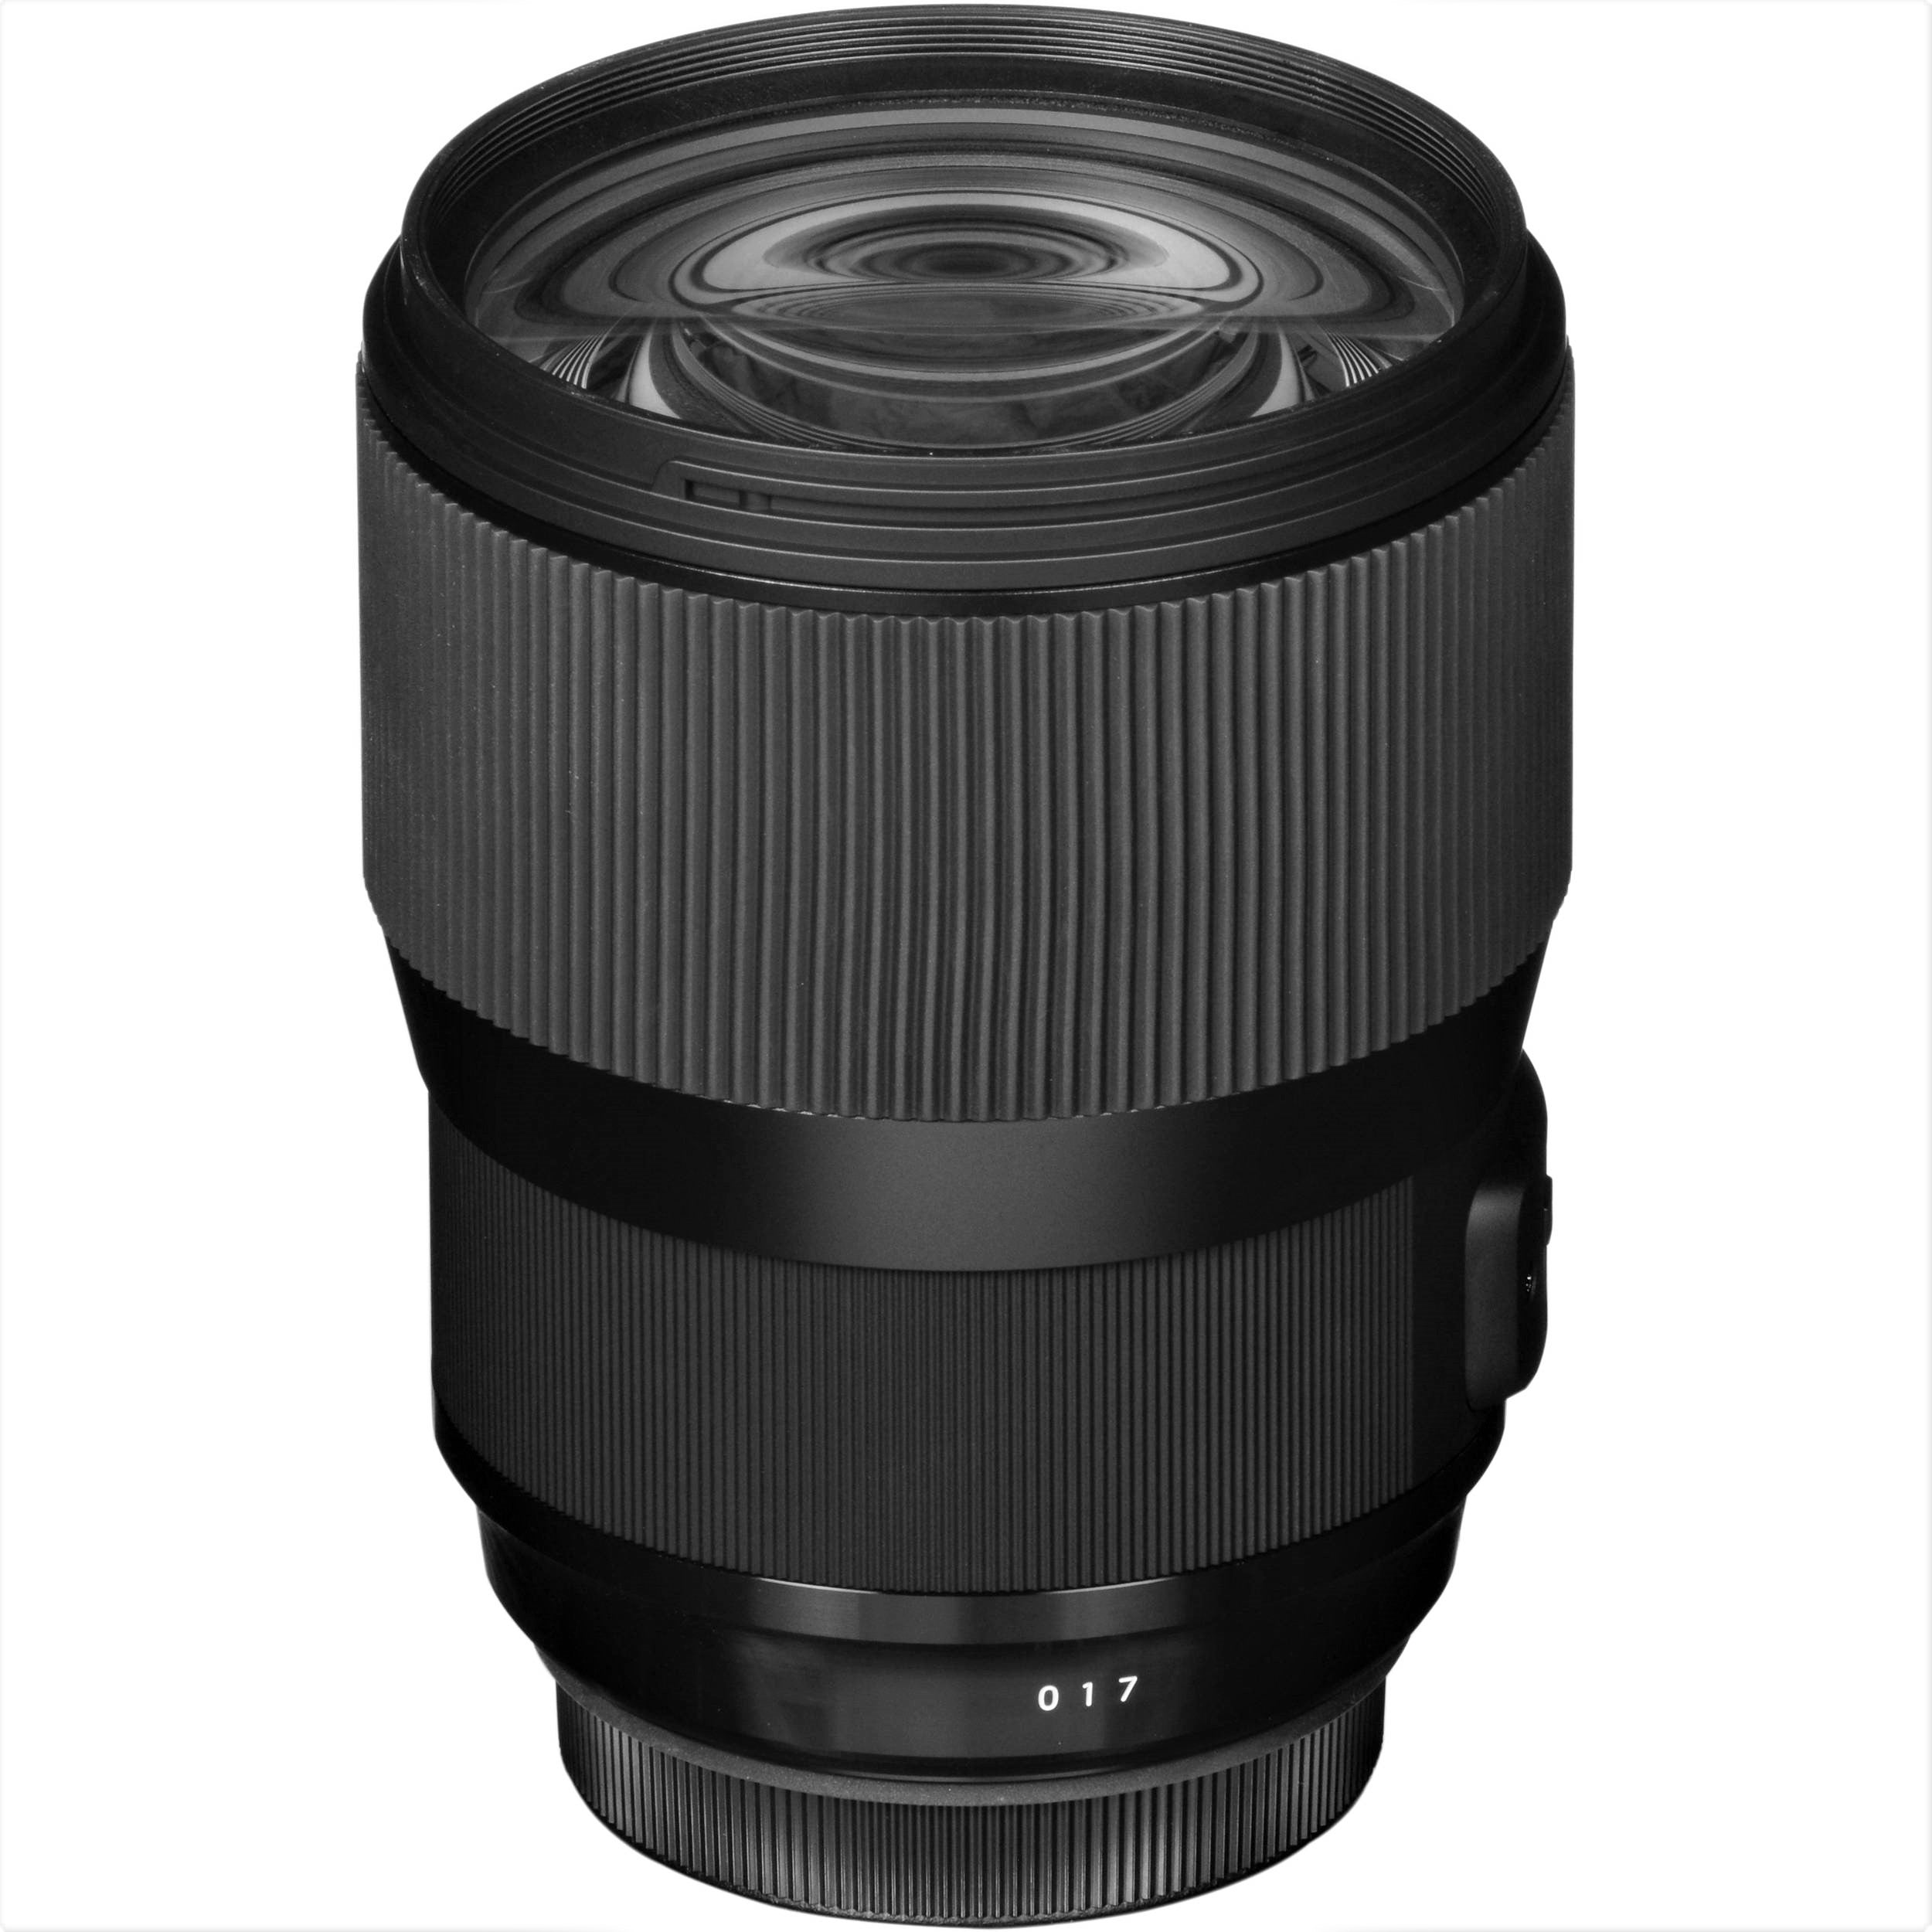 Sigma 135mm F1.8 DG HSM Art Lens for Sigma SA